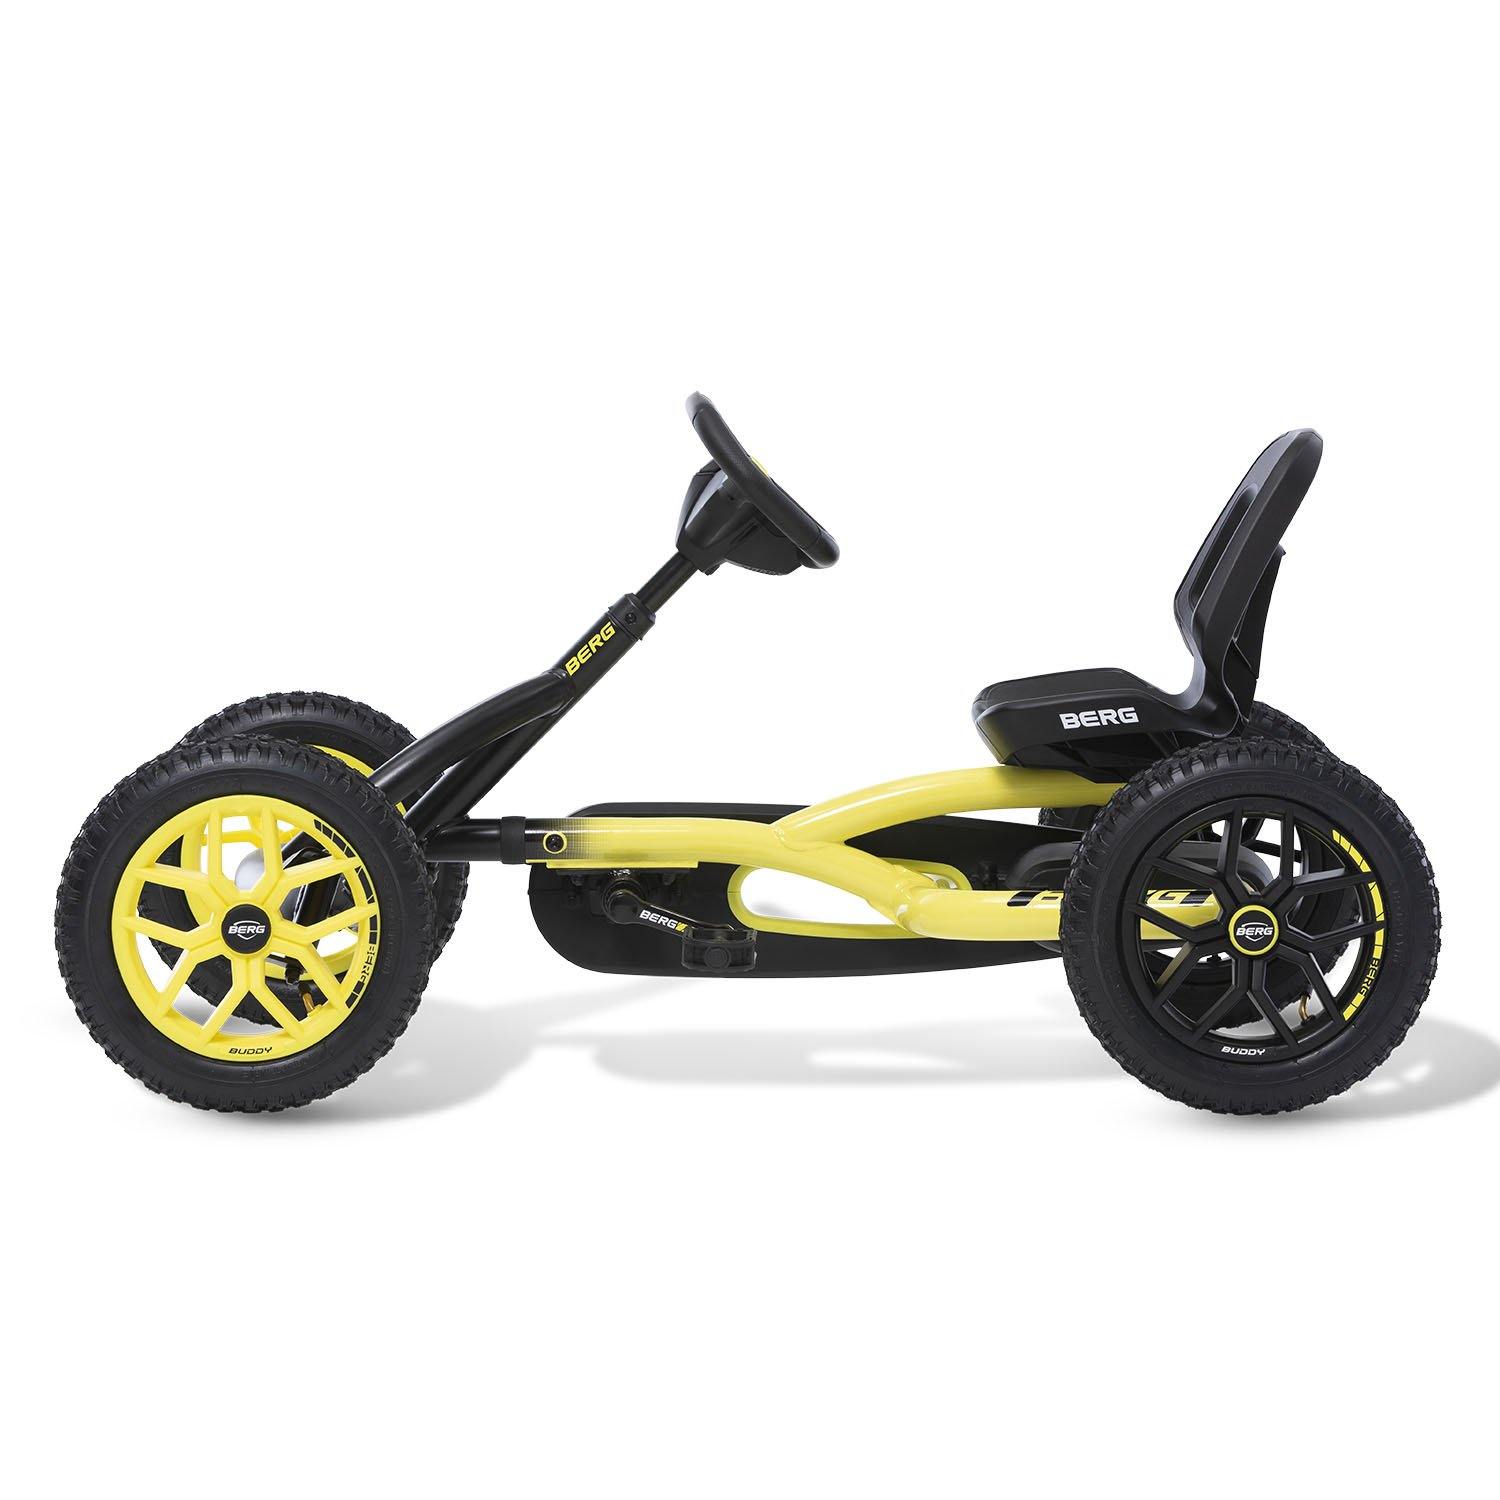  Berg Toys - Buddy Graphite Pedal Go Kart - Go Kart - Go Cart  for Kids - Pedal Car Outdoor Toys for Children Ages 3-8 - Ride On-Toy - BFR  System 